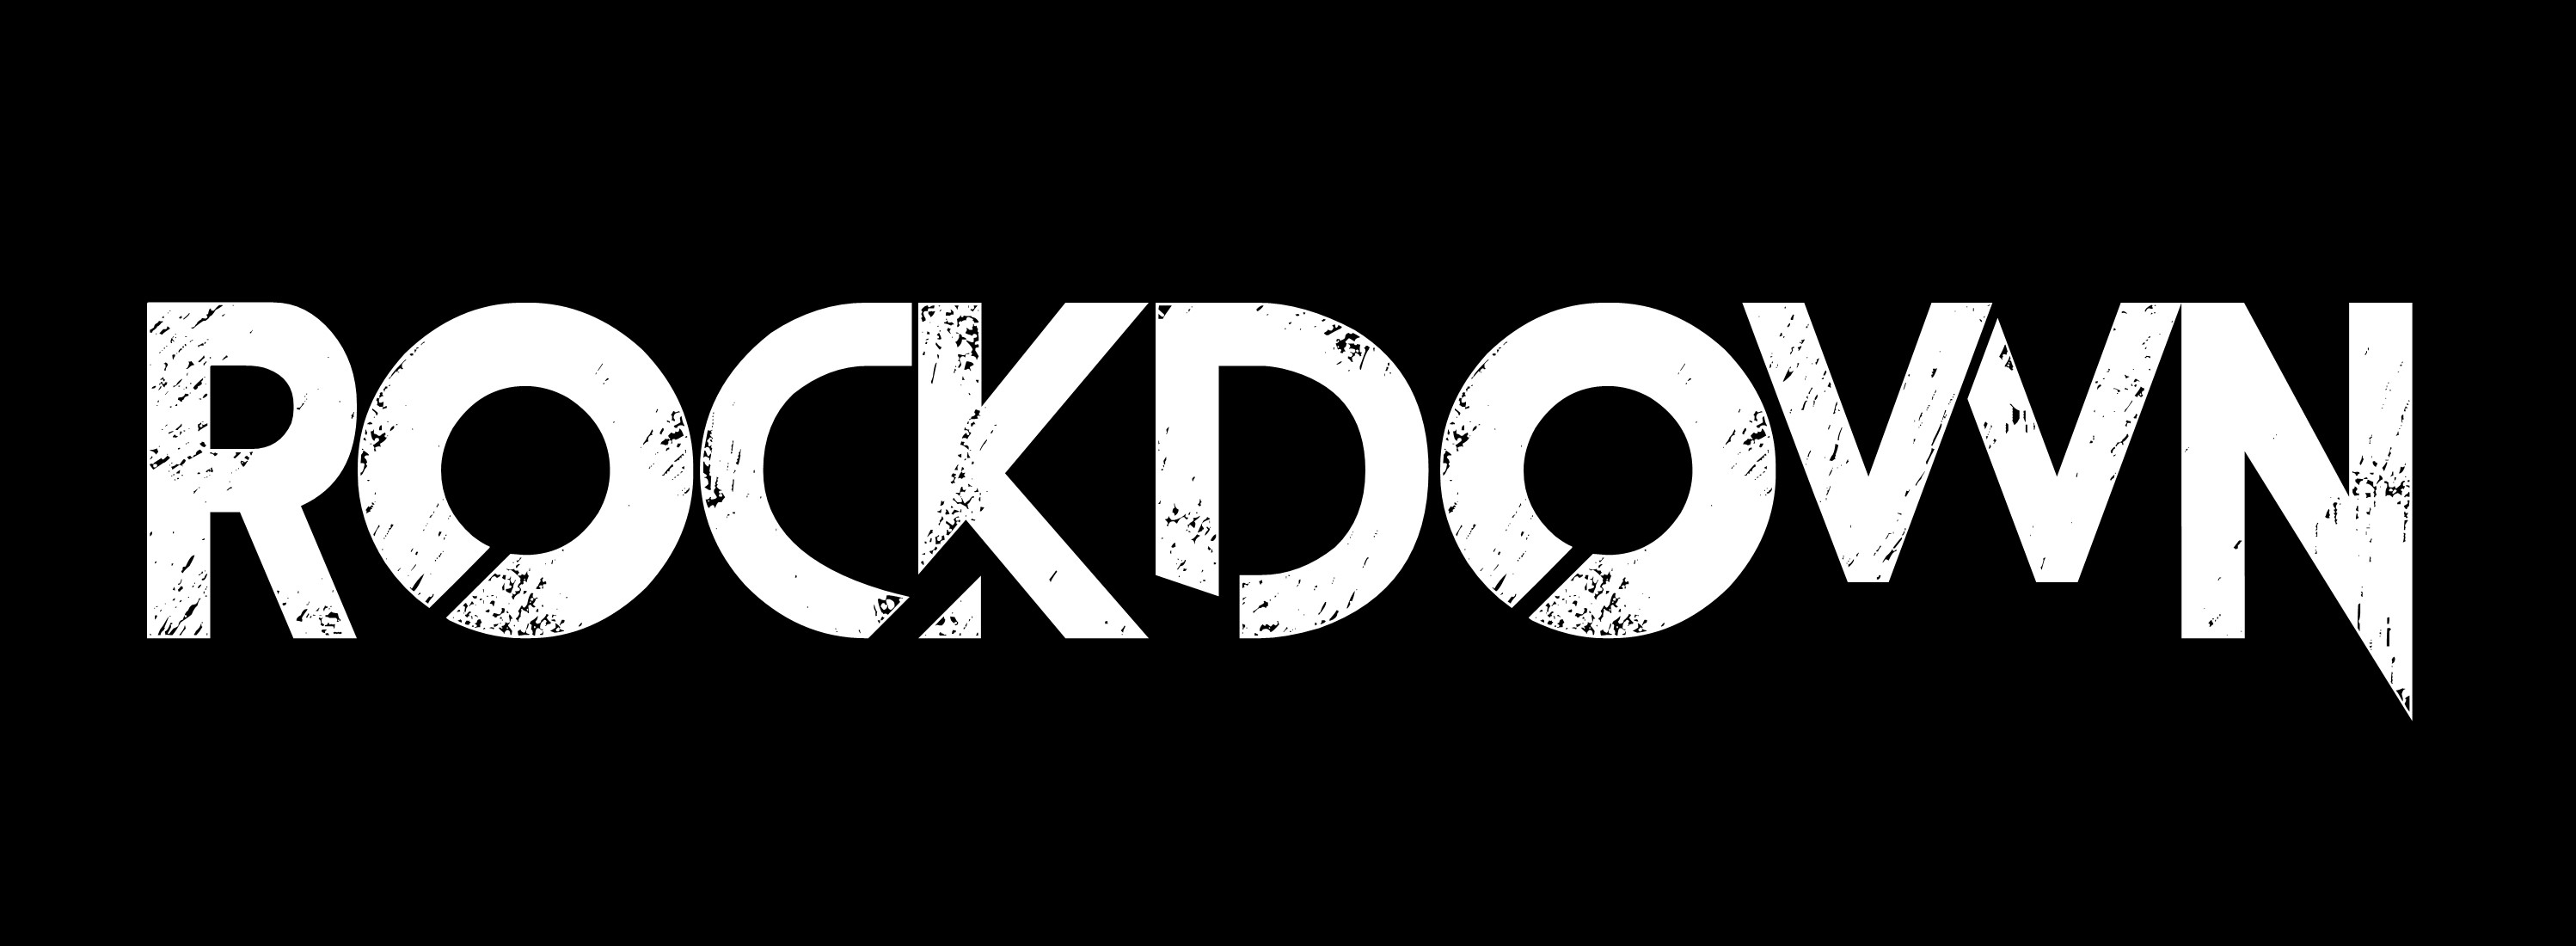 Rockdown_Logo_Plugged_Blackjpg